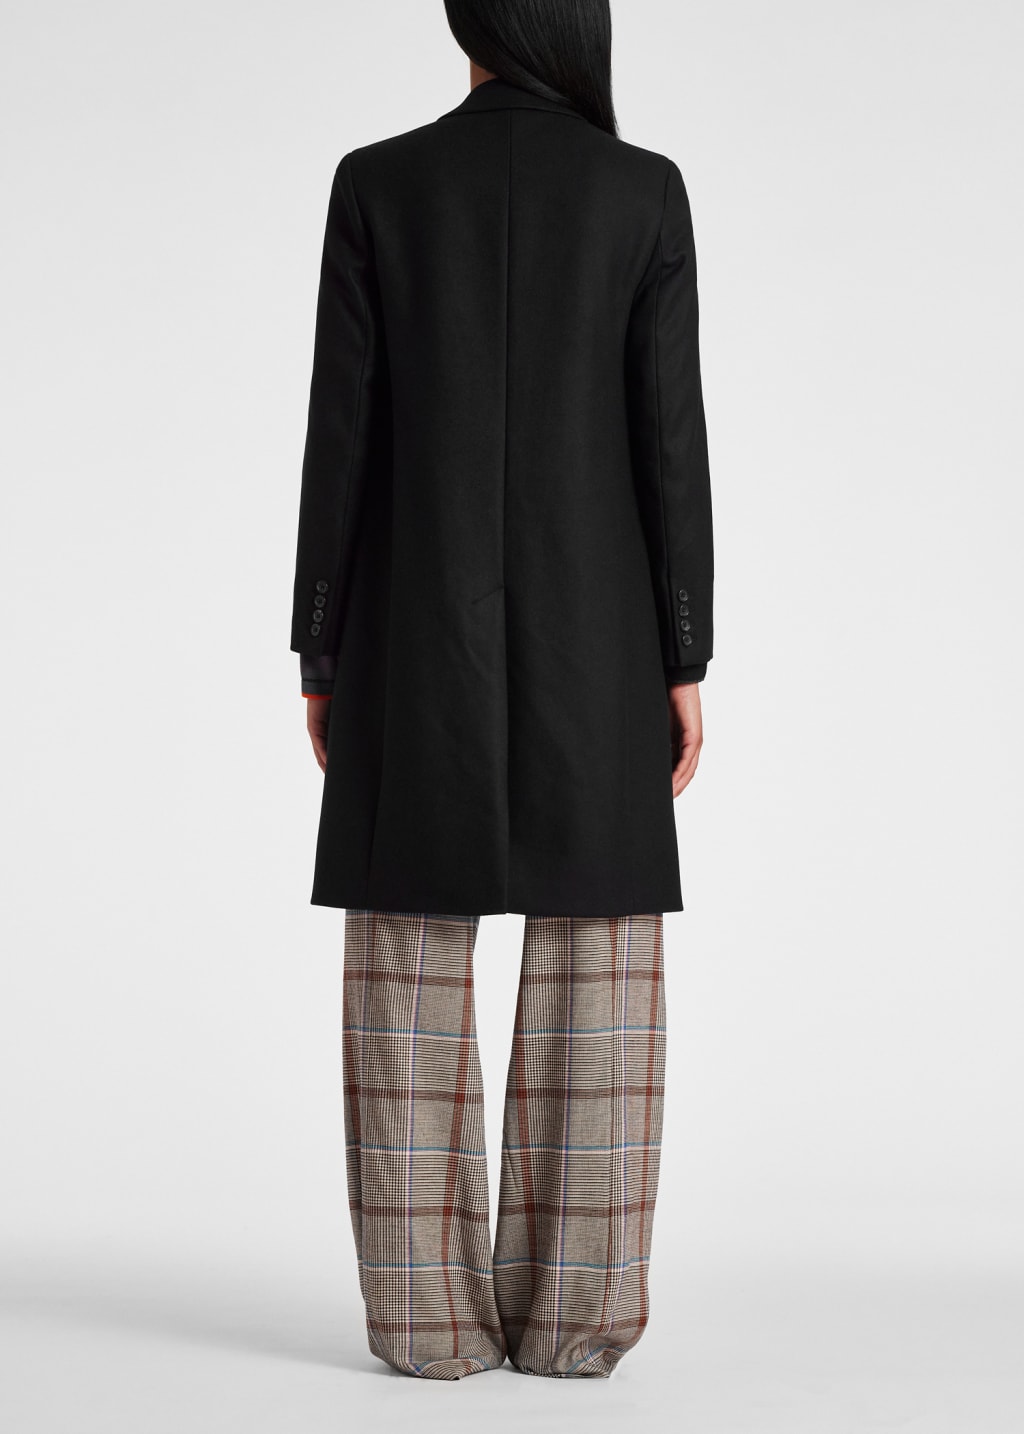 Model View - Women's Black Cashmere-Blend Epsom Coat Paul Smith